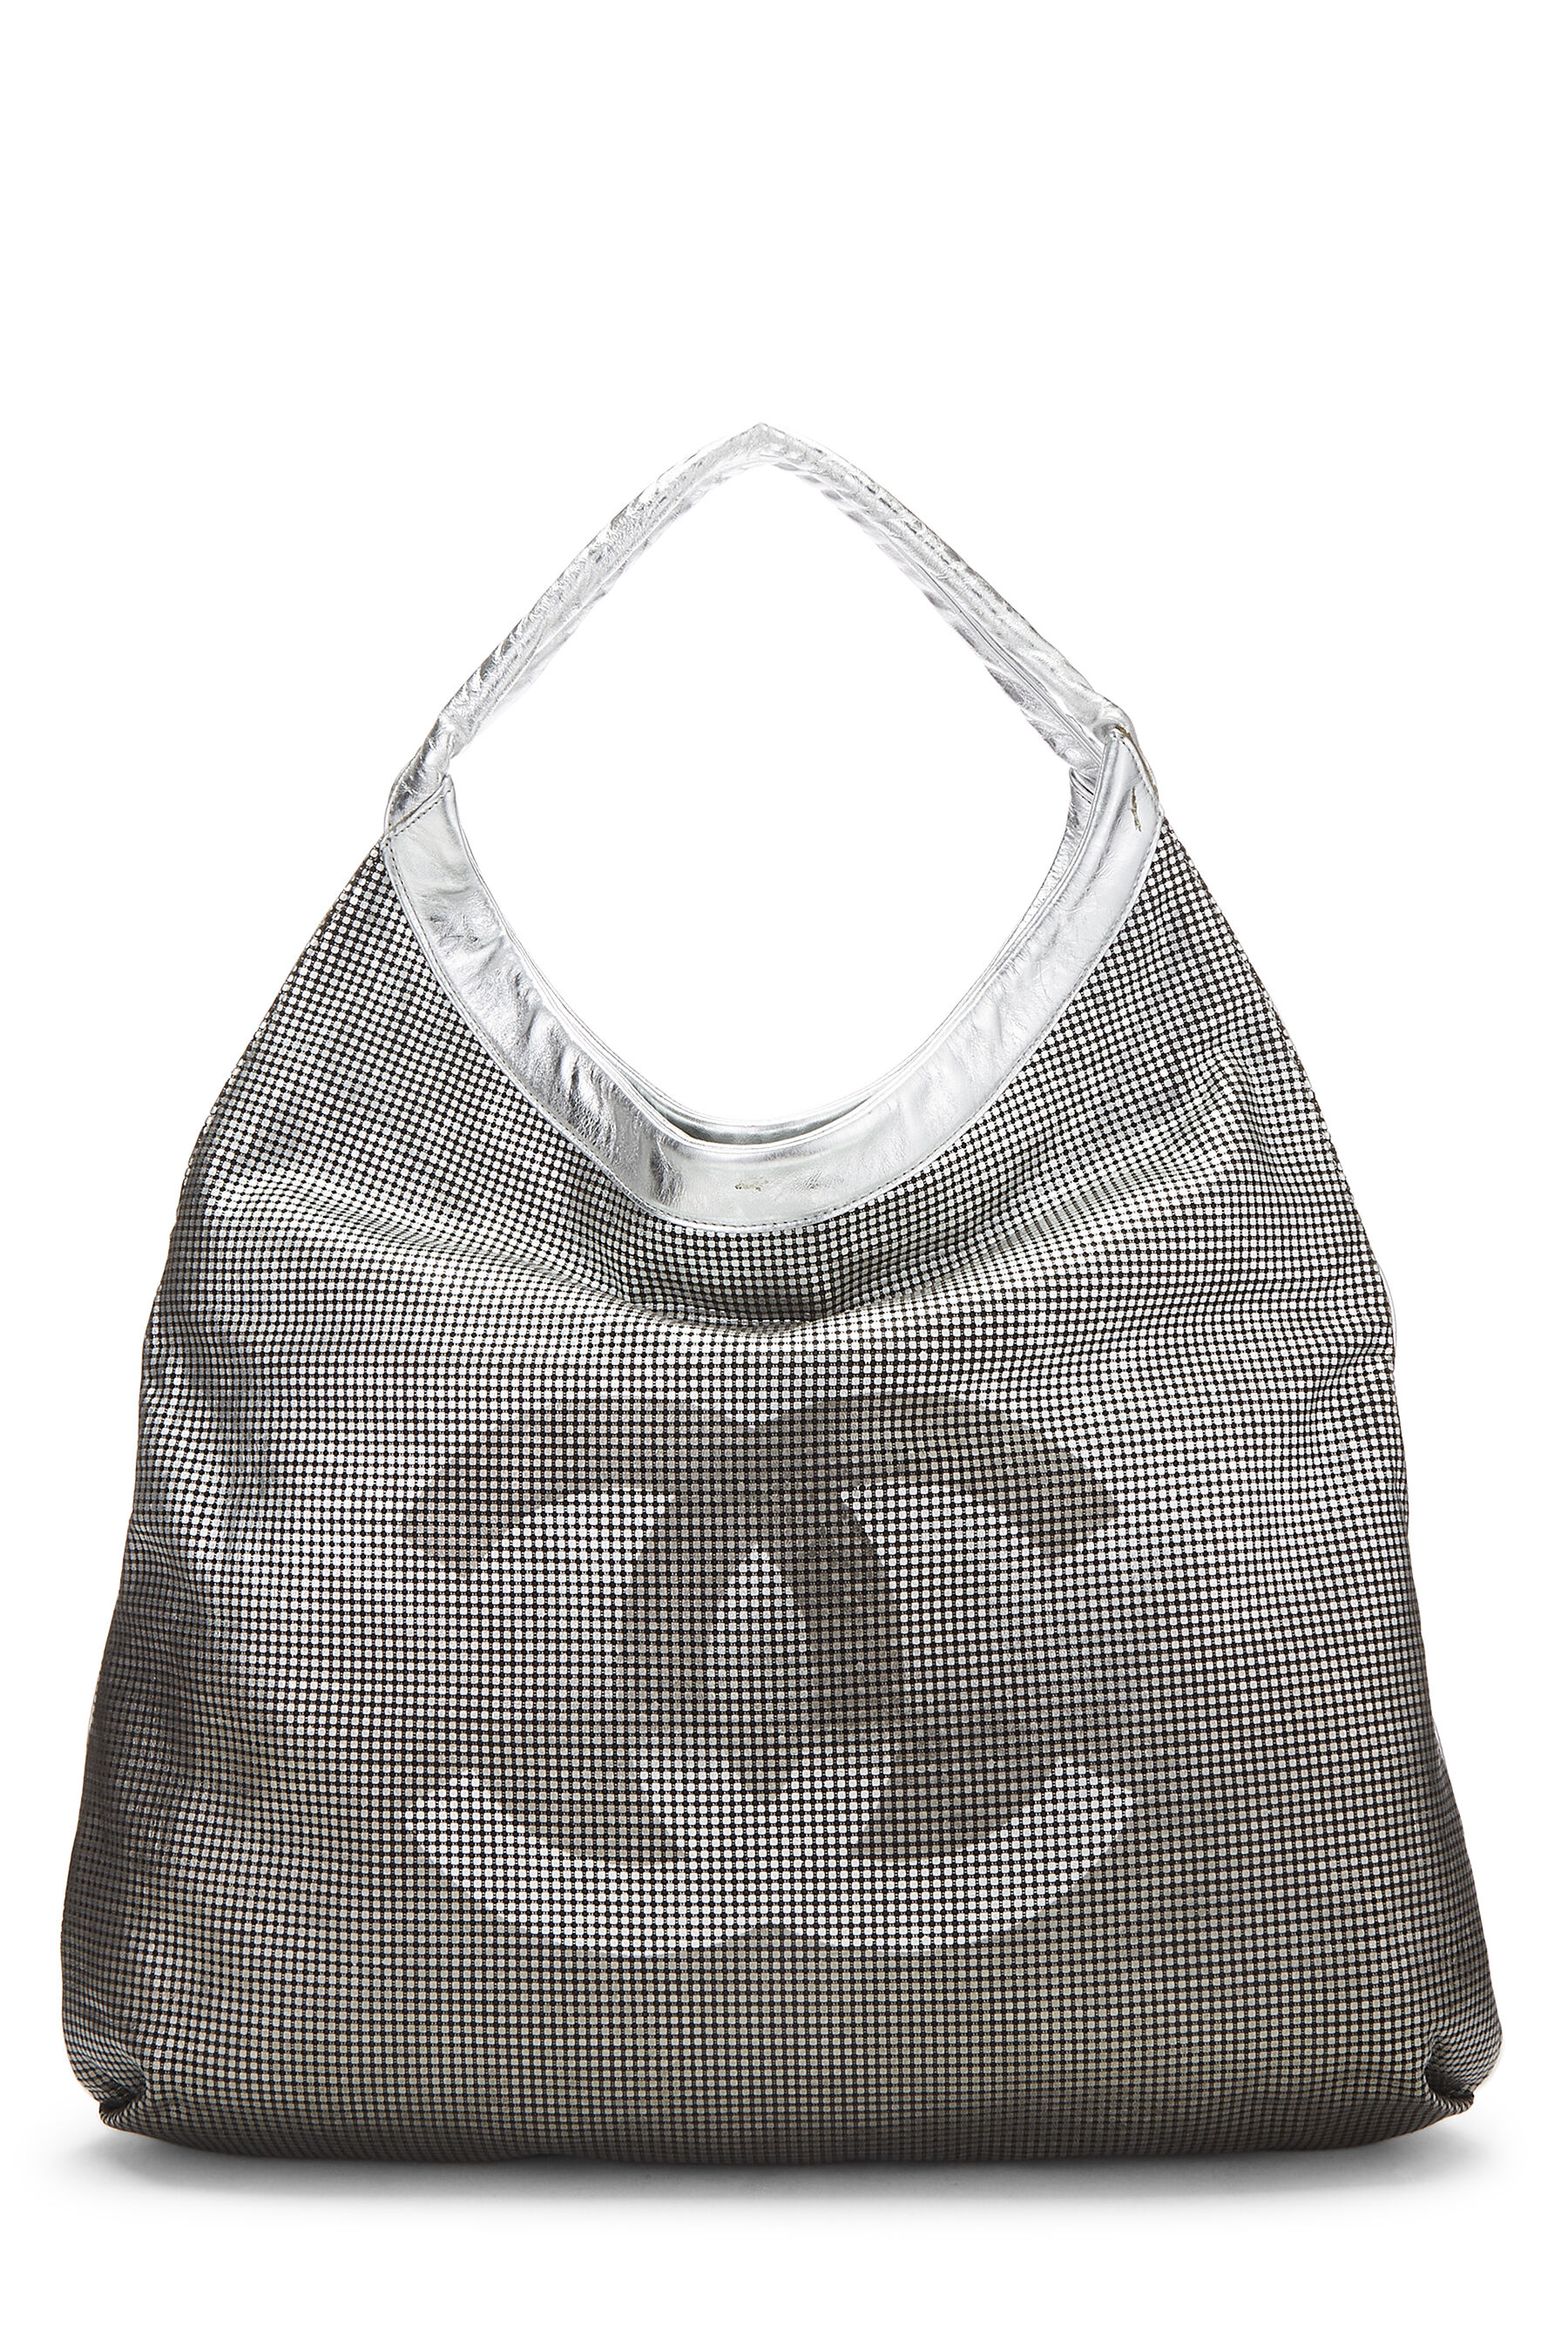 Chanel chain tote bag - Gem